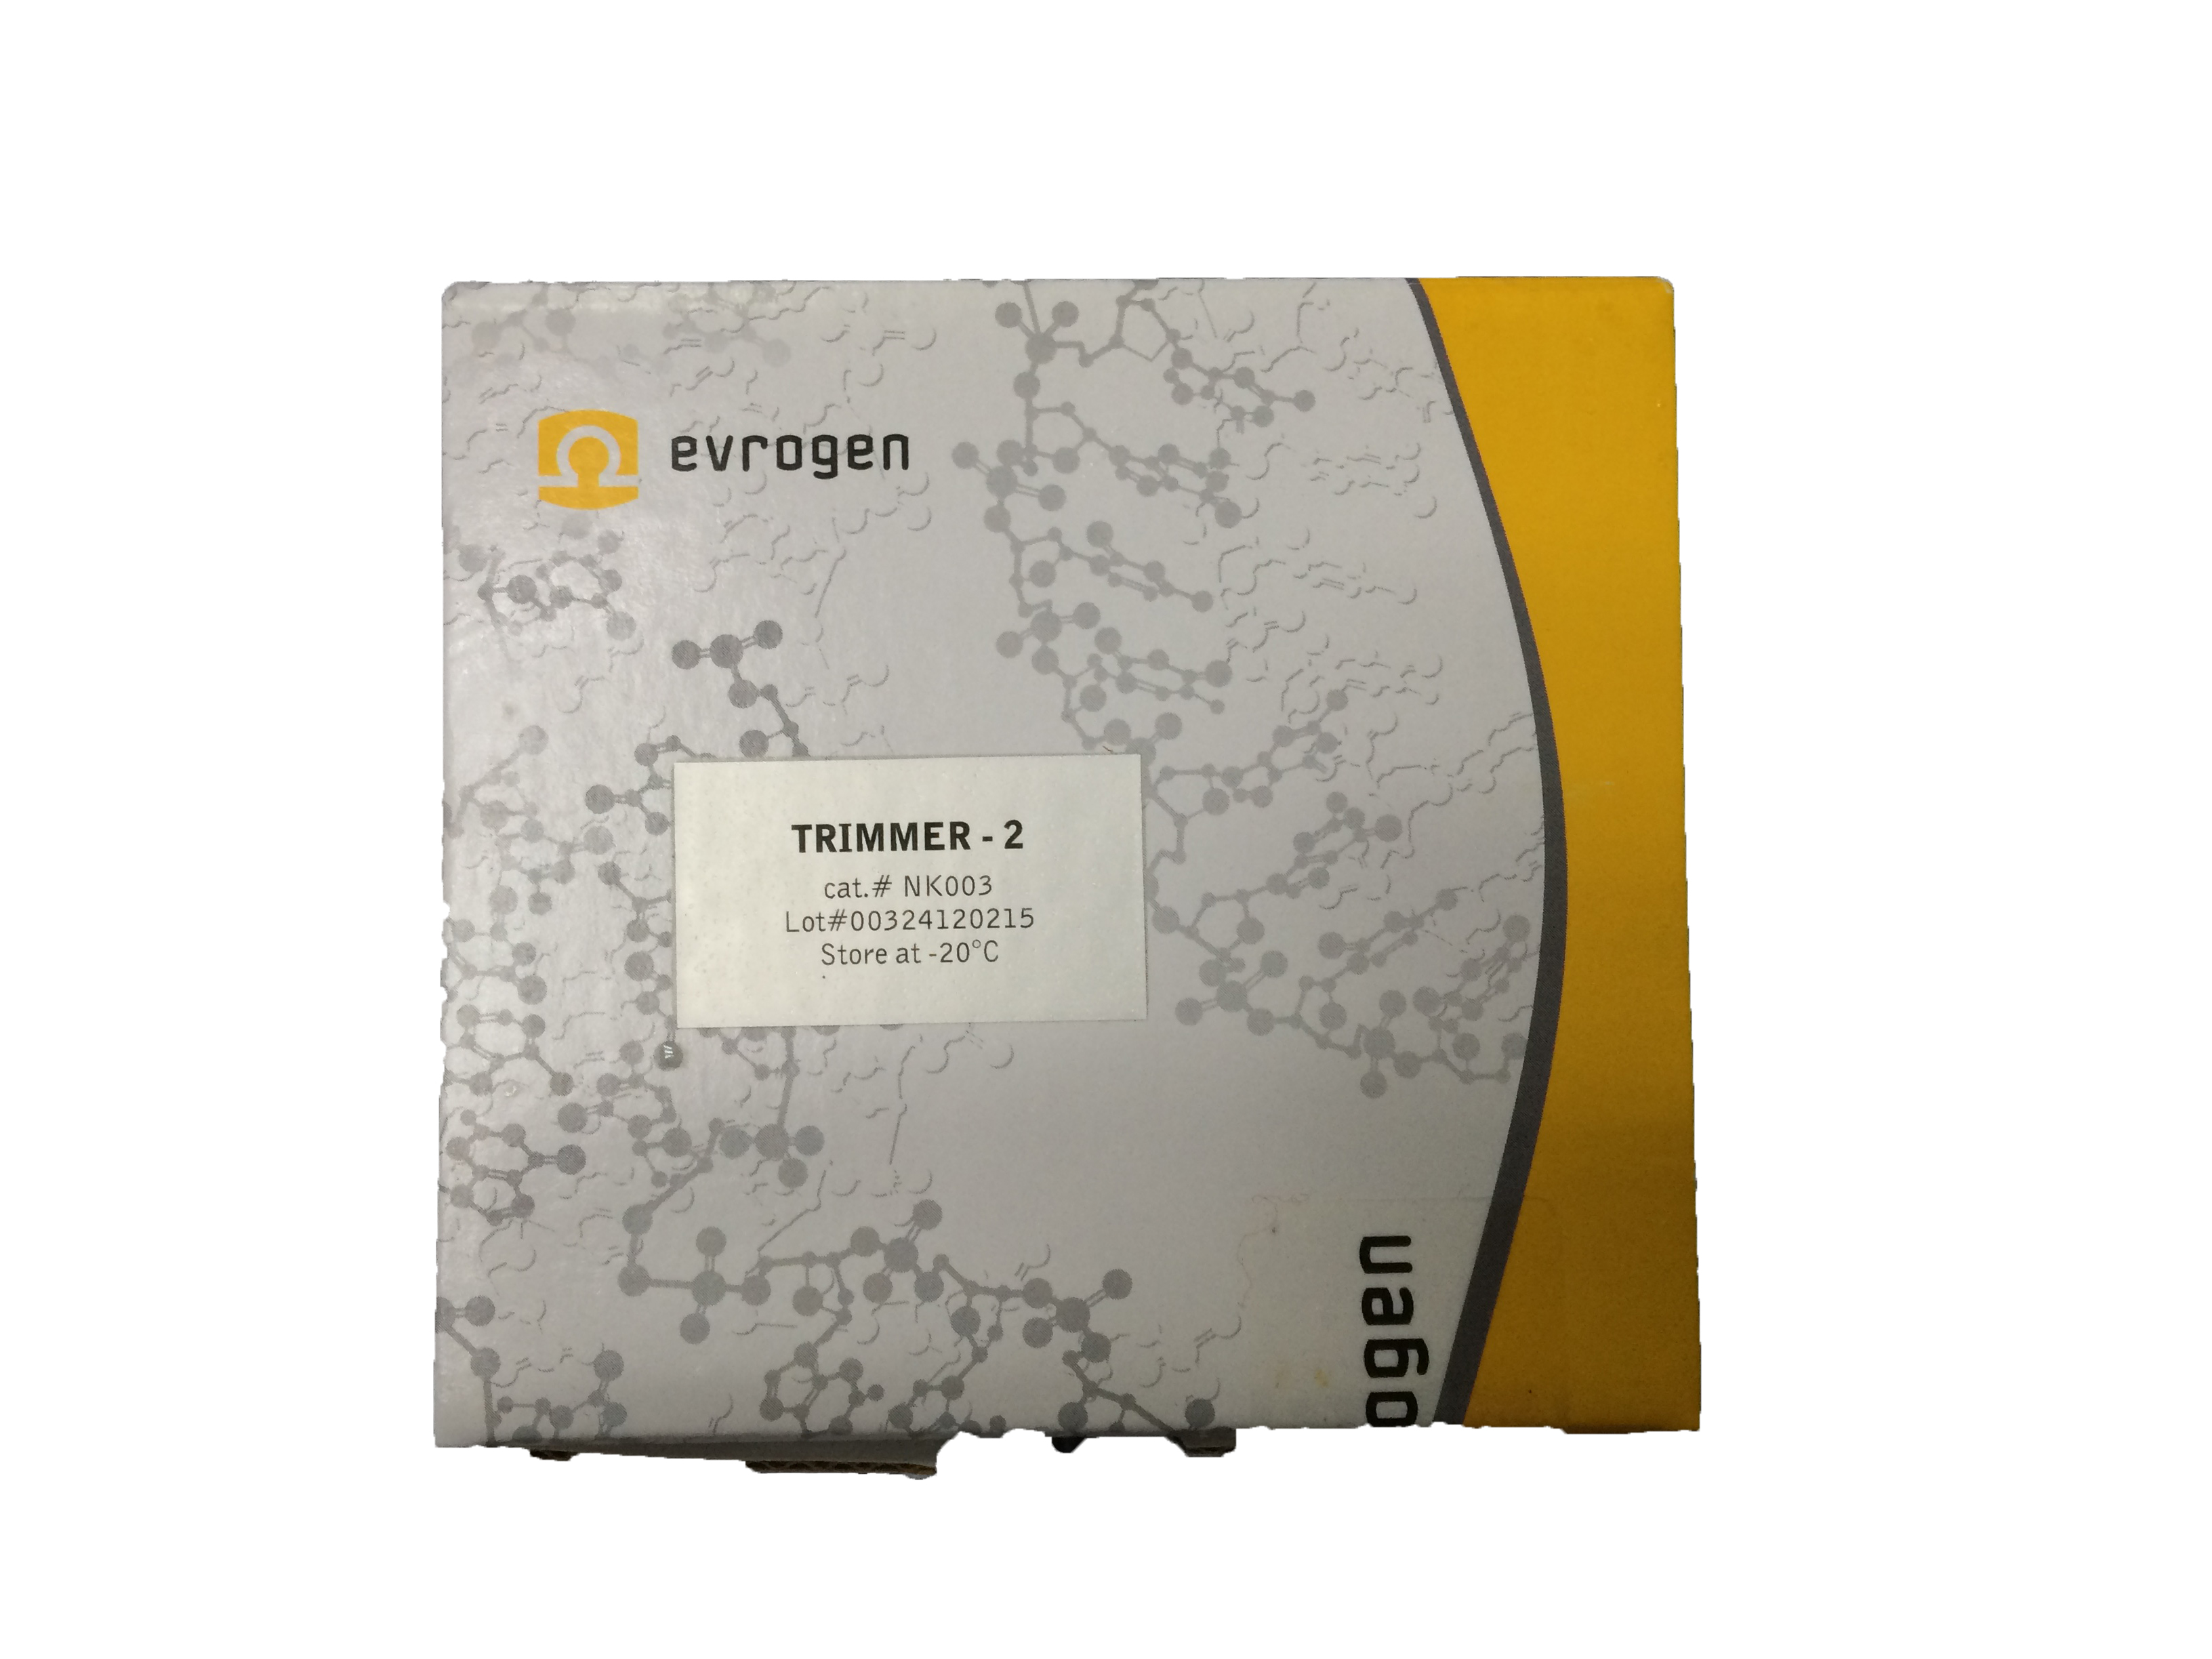 Trimmer-2 cDNA normalization kit（cDNA 均一化试剂盒）65折优惠